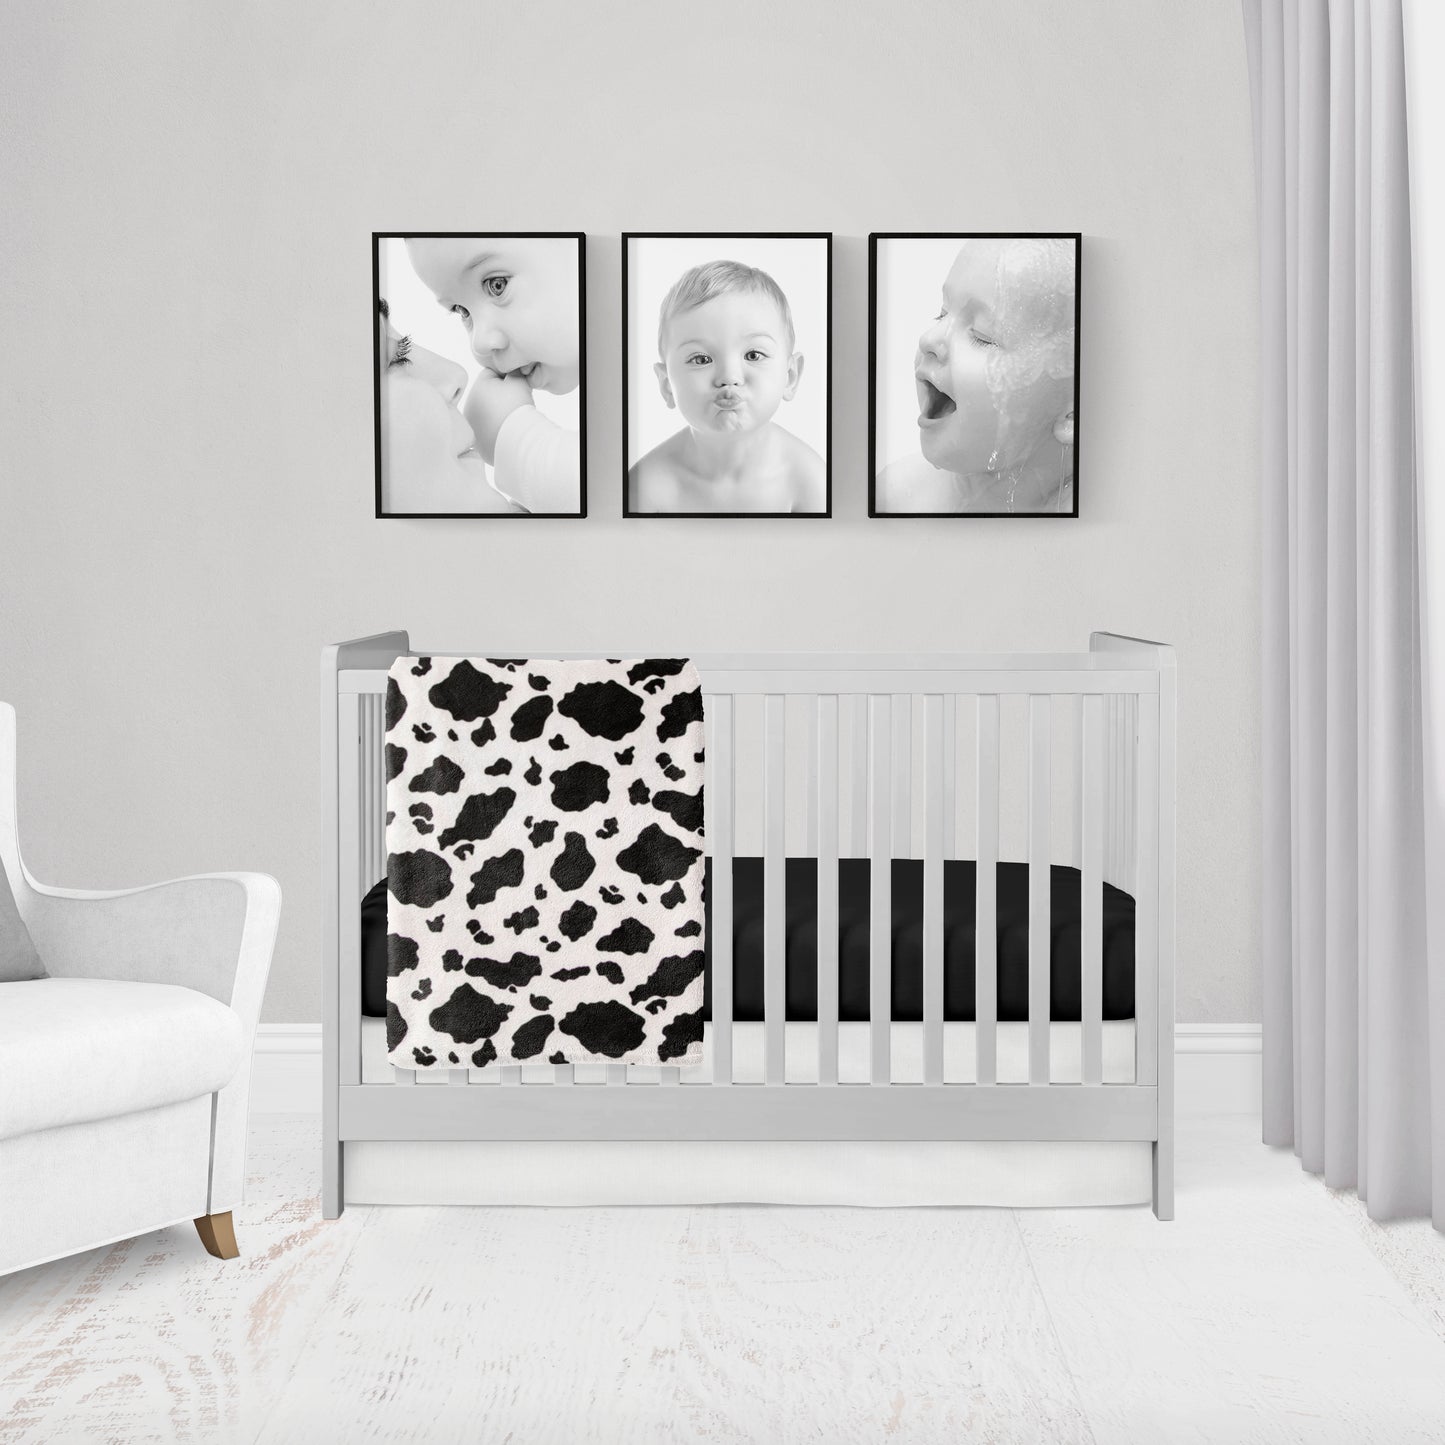 2-piece set includes the cow print blanket & cow print crib sheet or black crib sheet